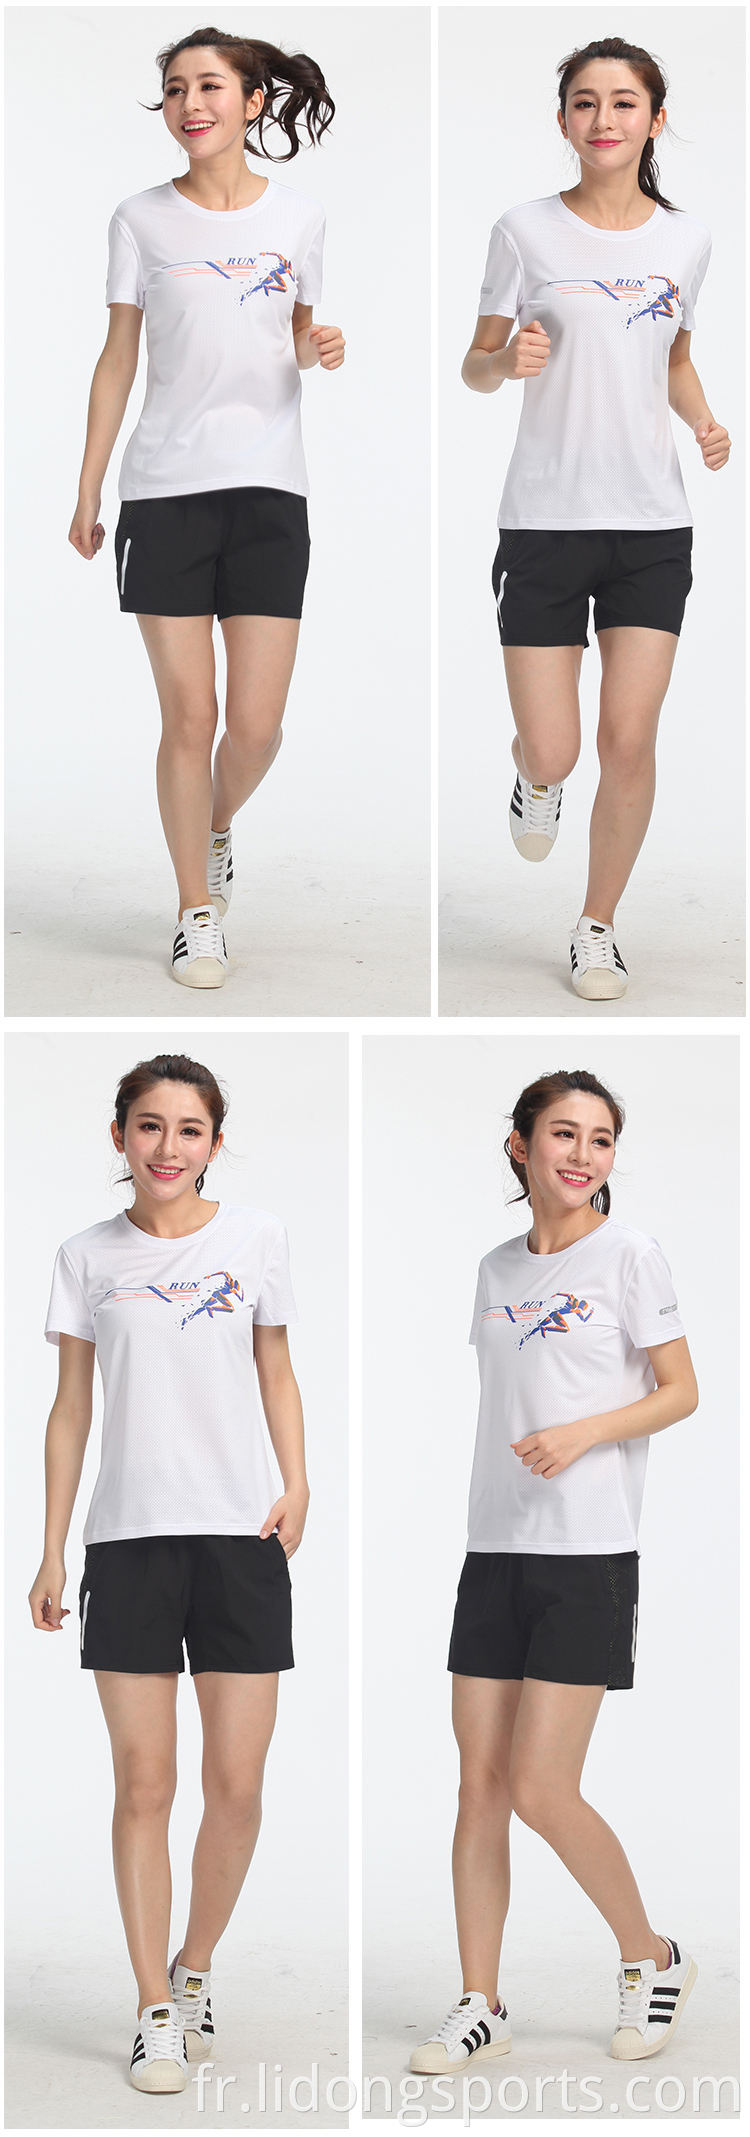 Lidong en gros t-shirts imprimés bon marché